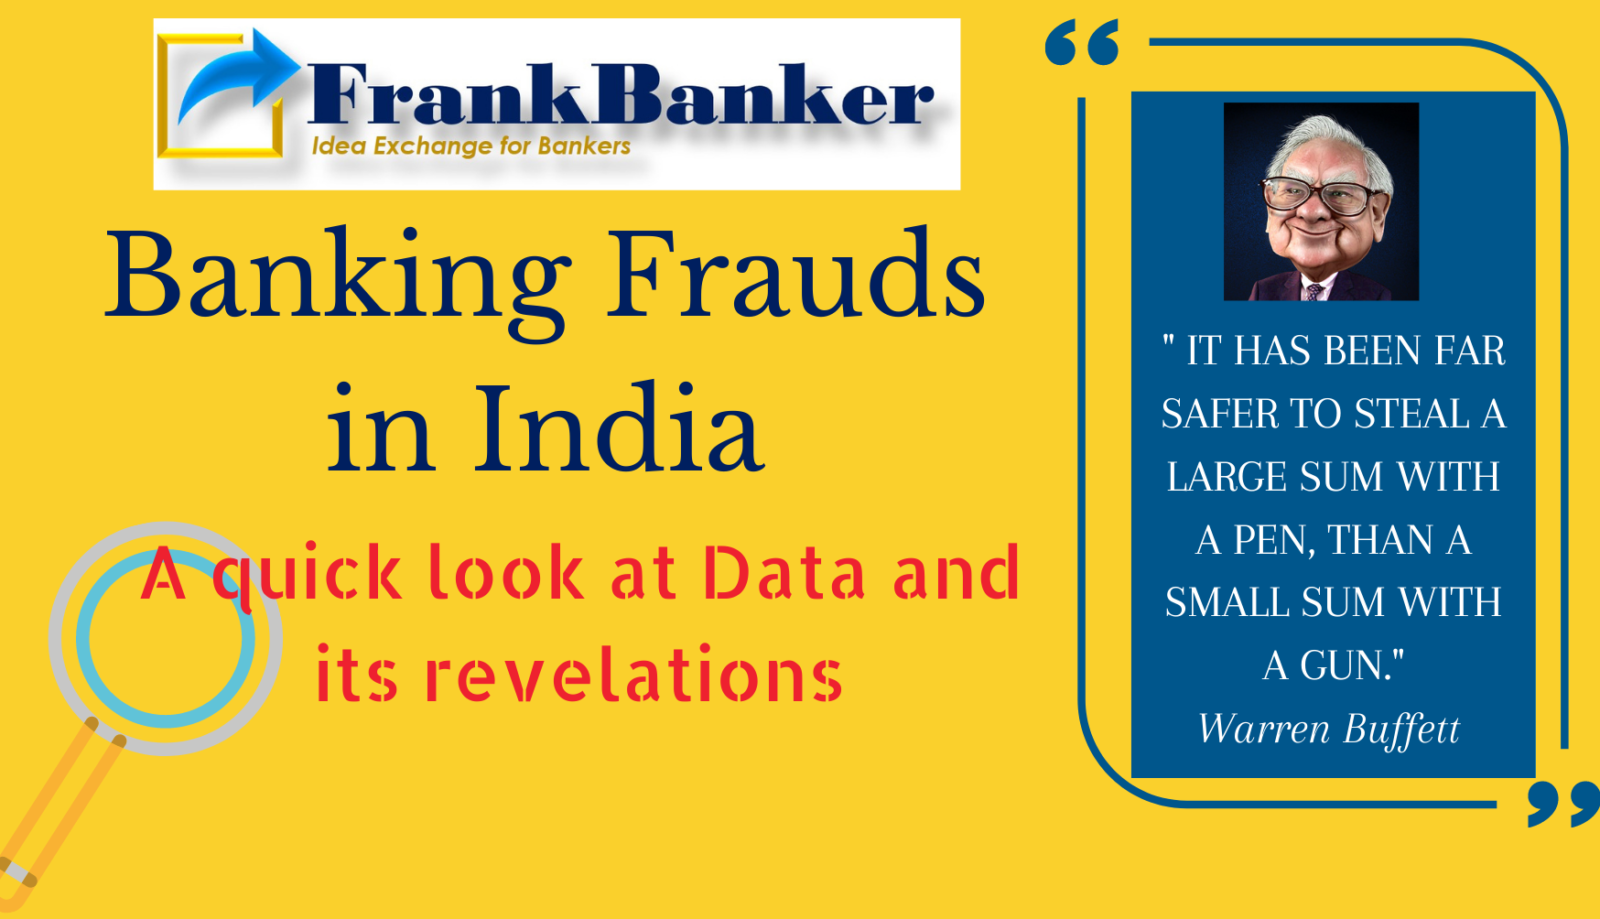 internet banking frauds case study india